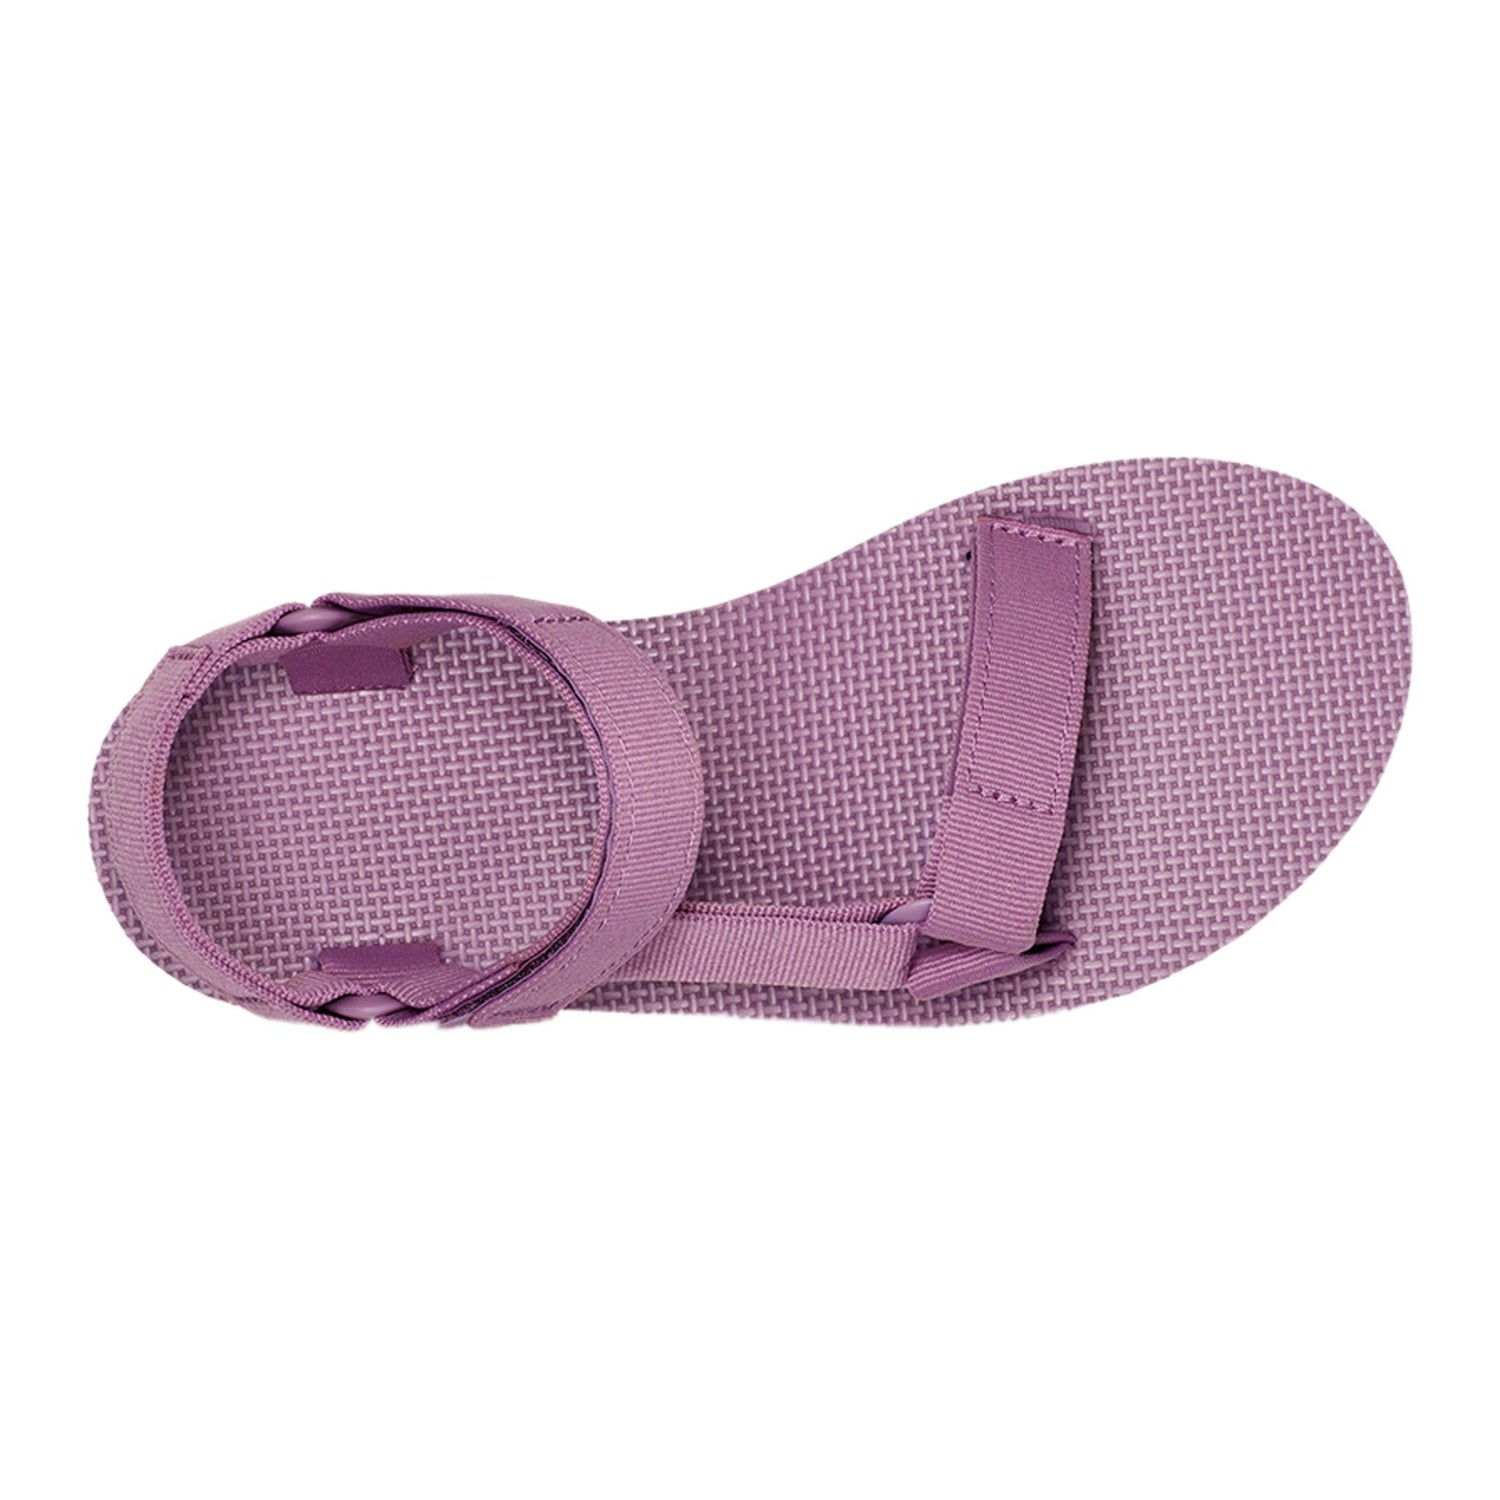 Peltz Shoes  Women's Teva Midform Universal Sandal LAVENDER 1090969-DLAV